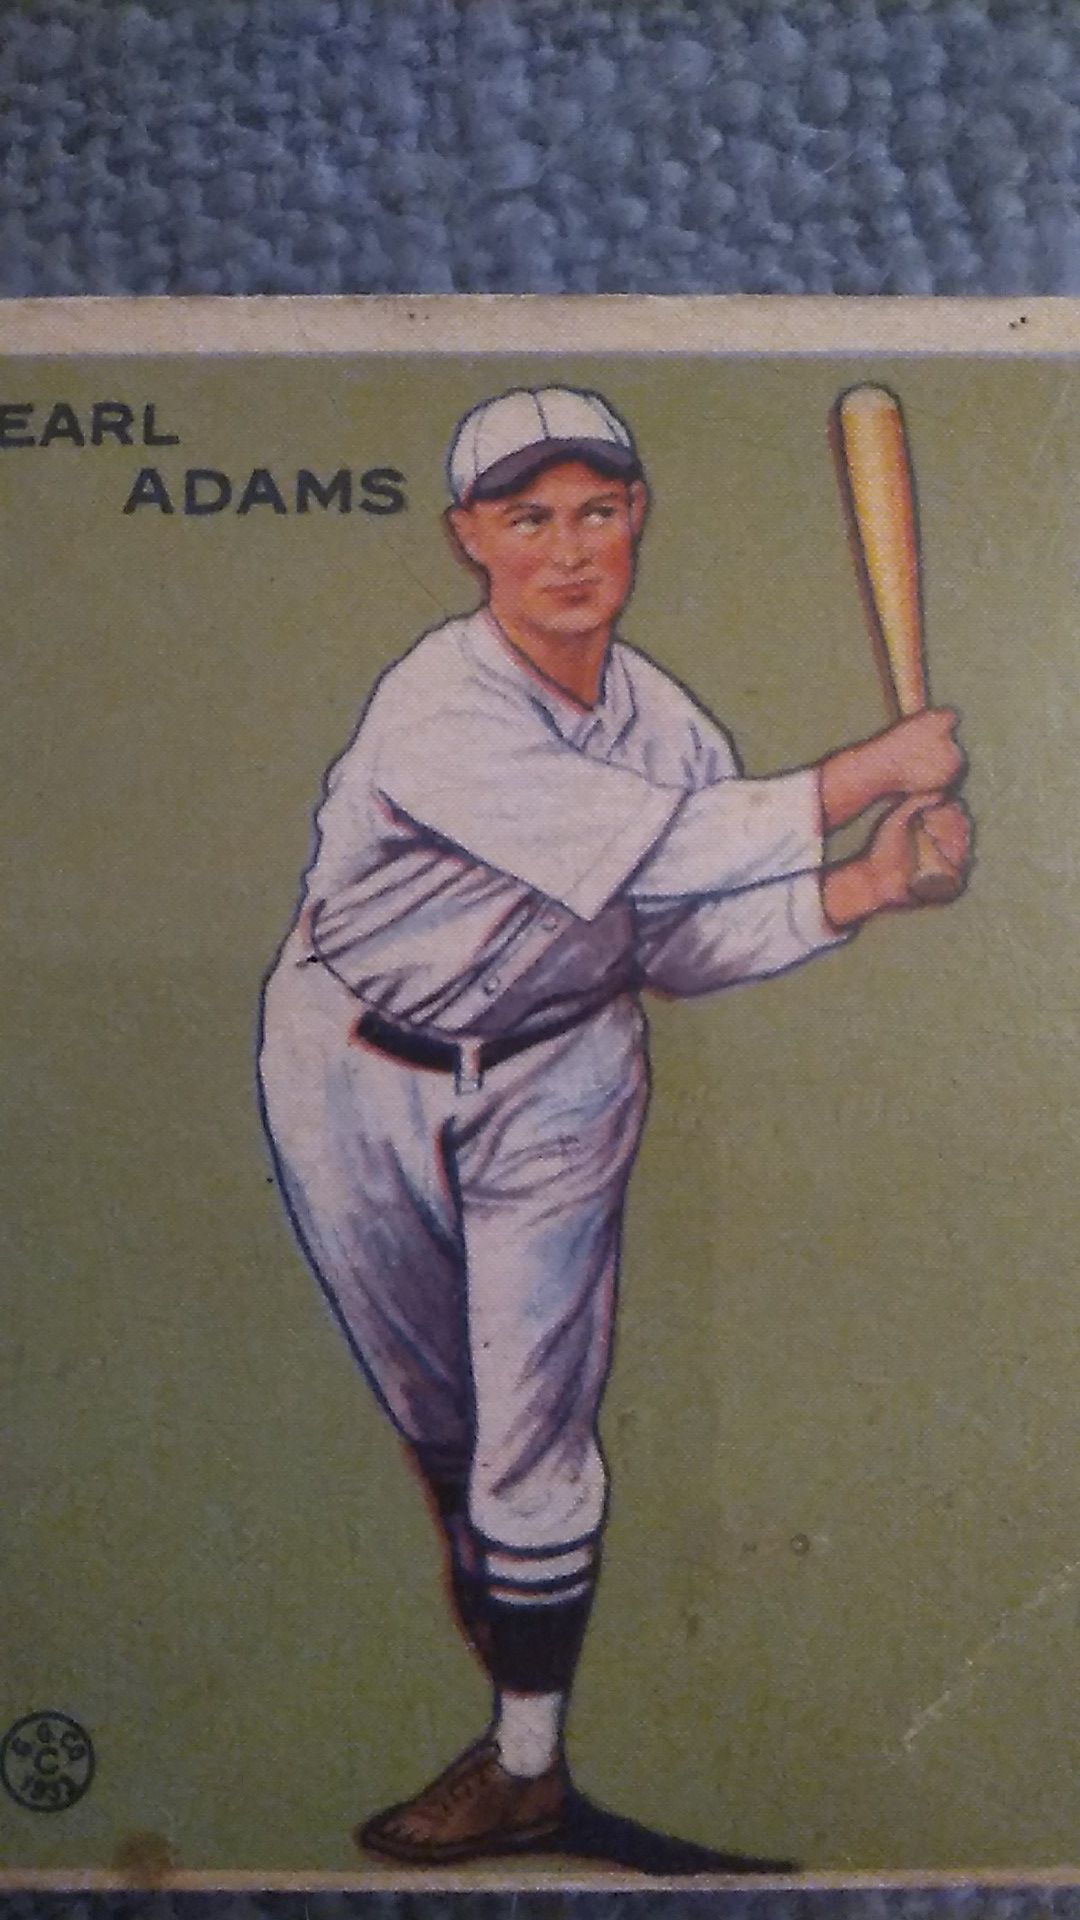 1933 EARL ADAMS BIG LEAGUE CHEWING GUM BASEBALL CARD